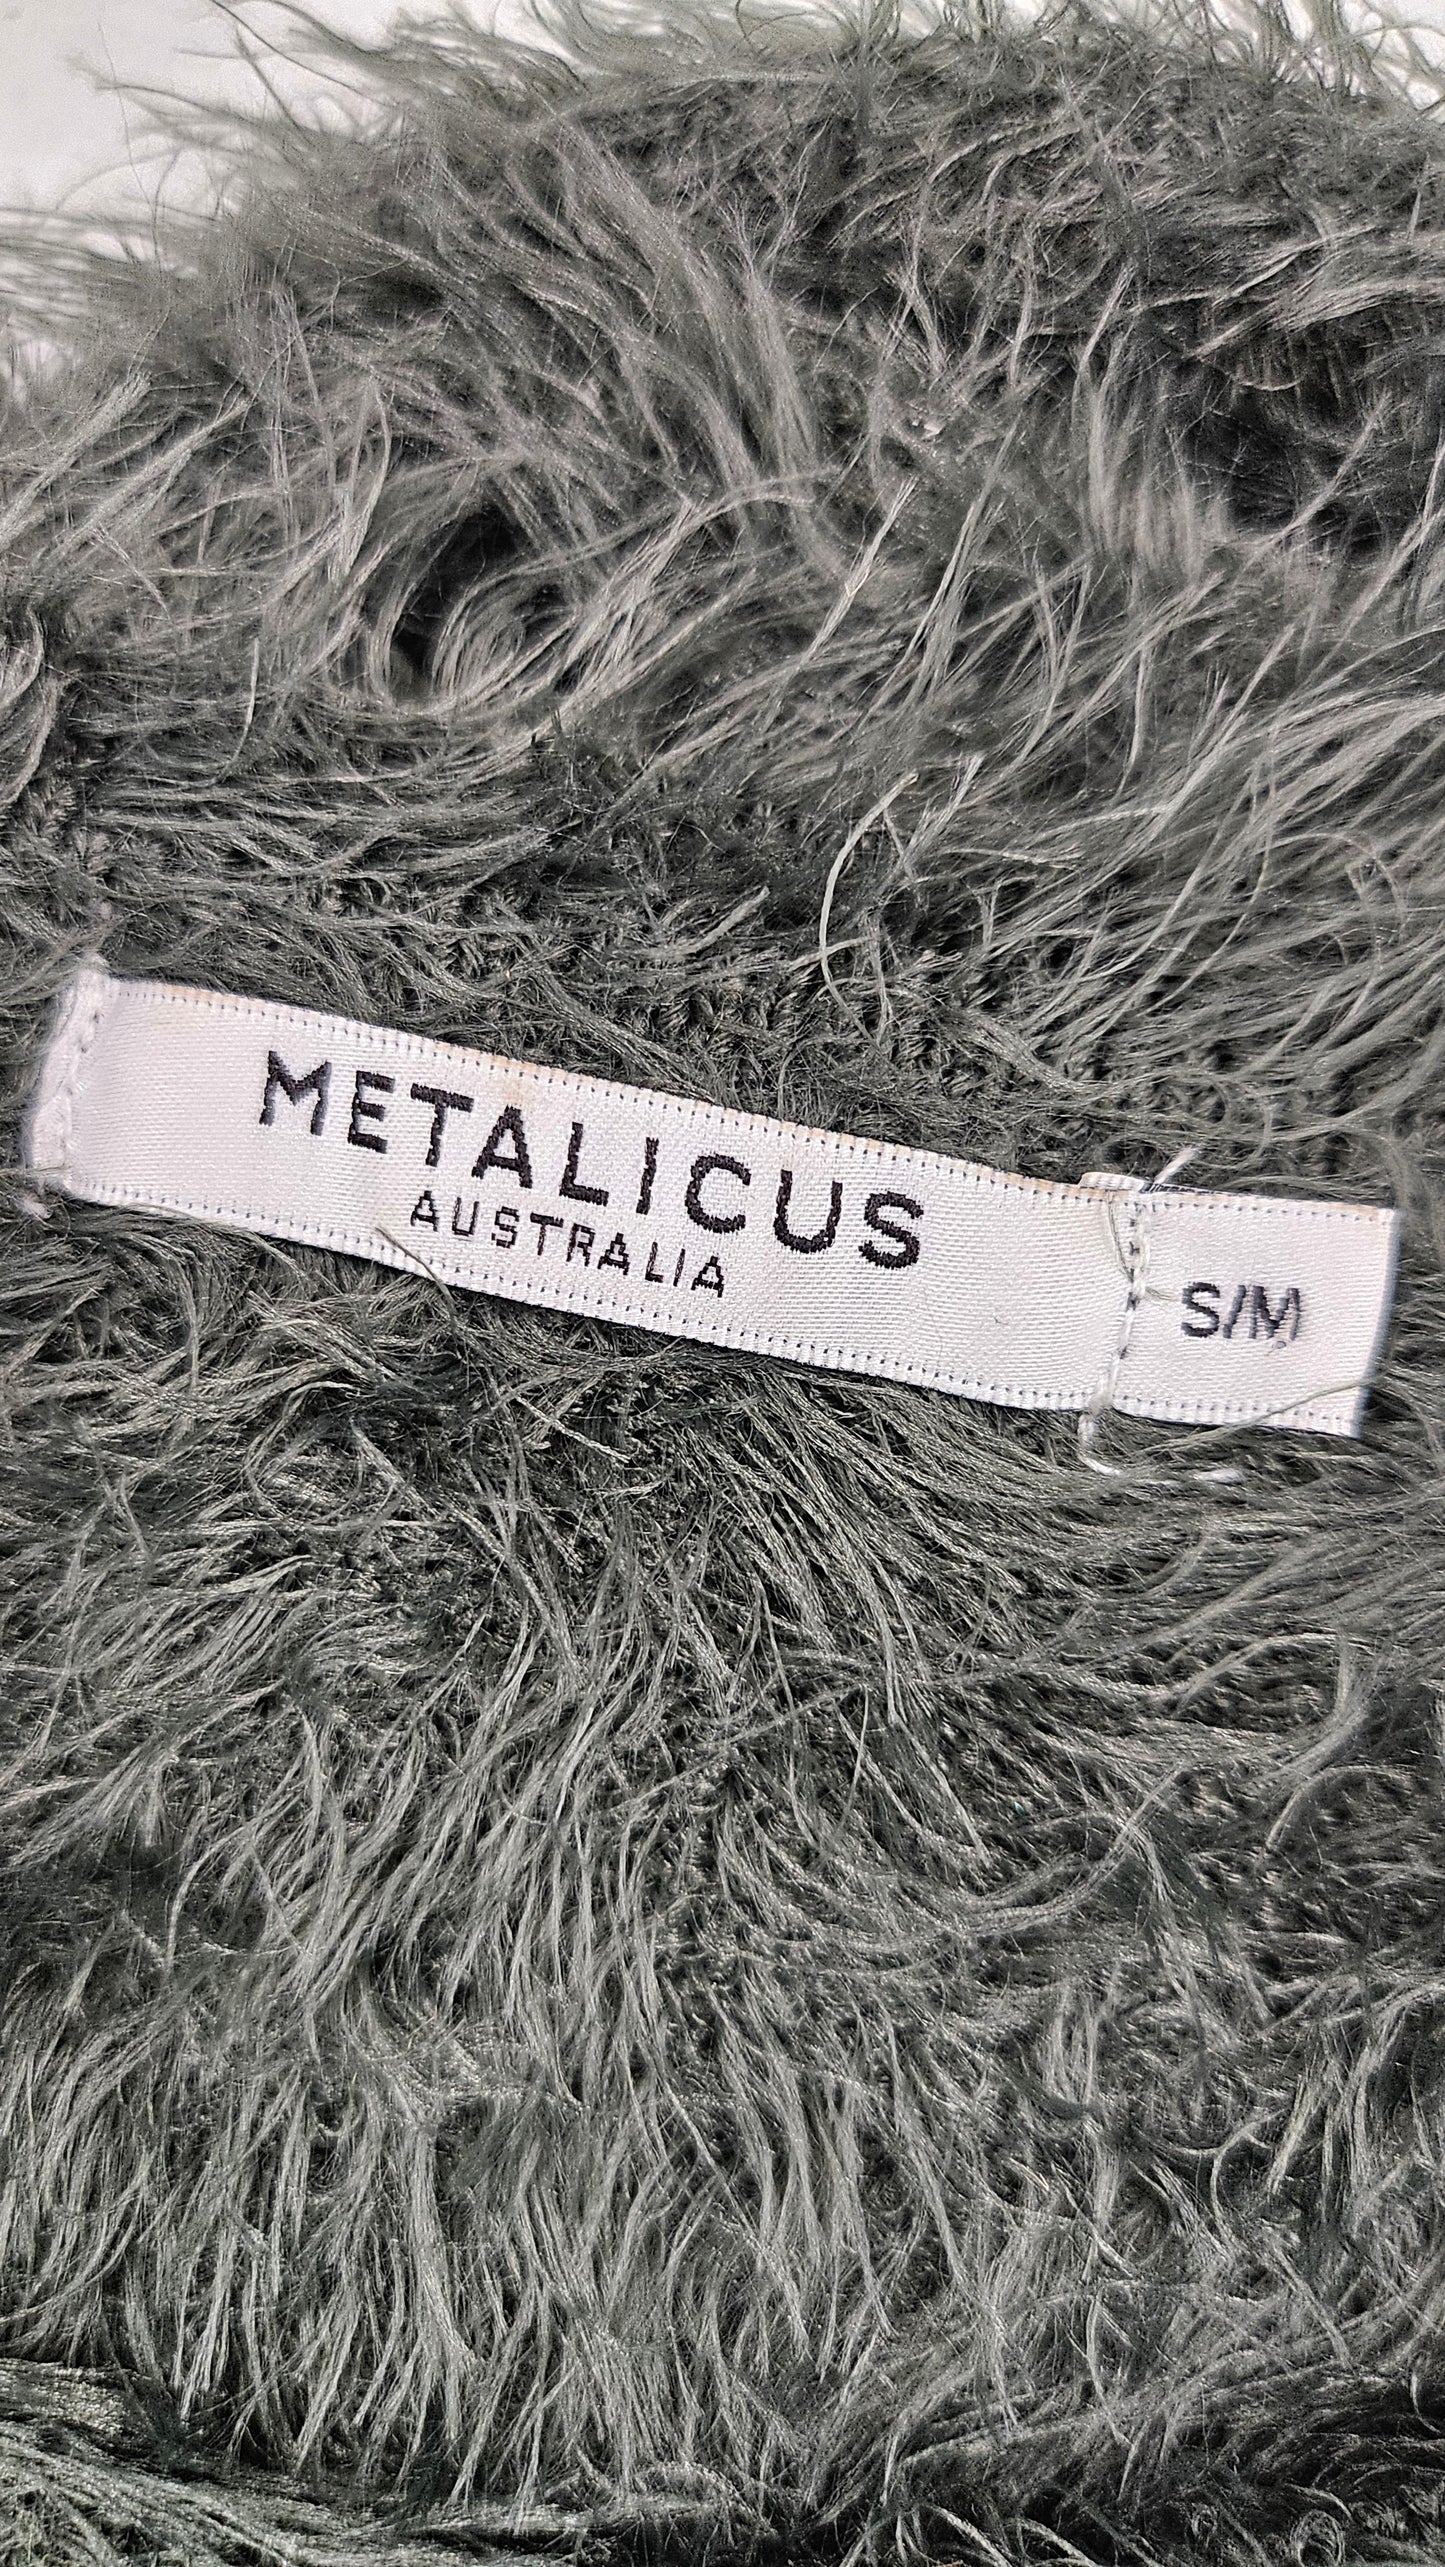 Metalicus Olive Crop Knit (10-12)